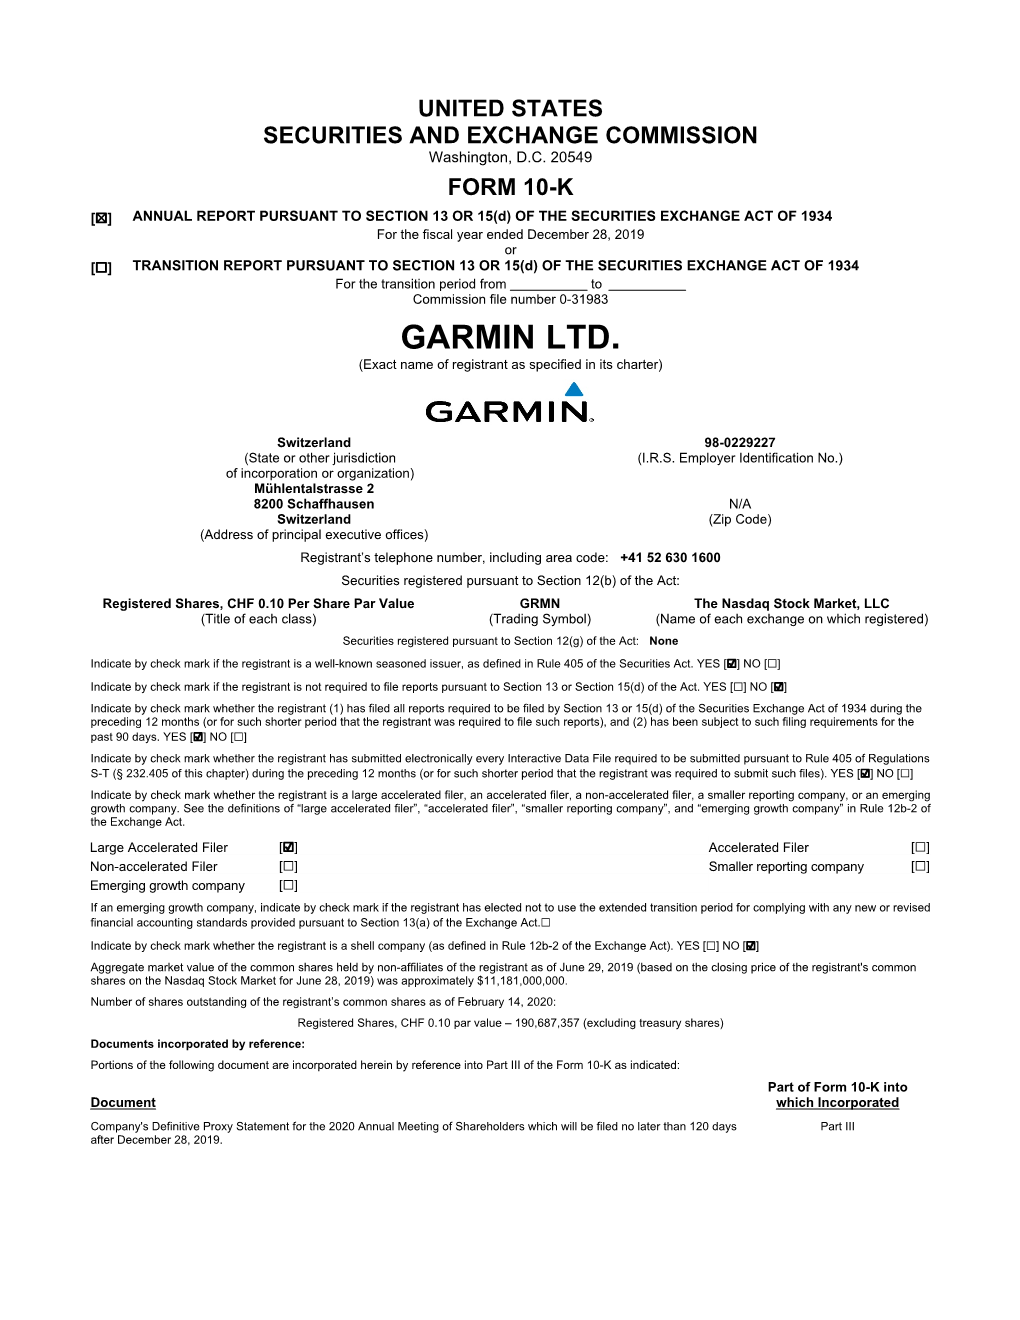 GARMIN LTD (Form: 10-K, Received: 02/20/2019 07:07:07)